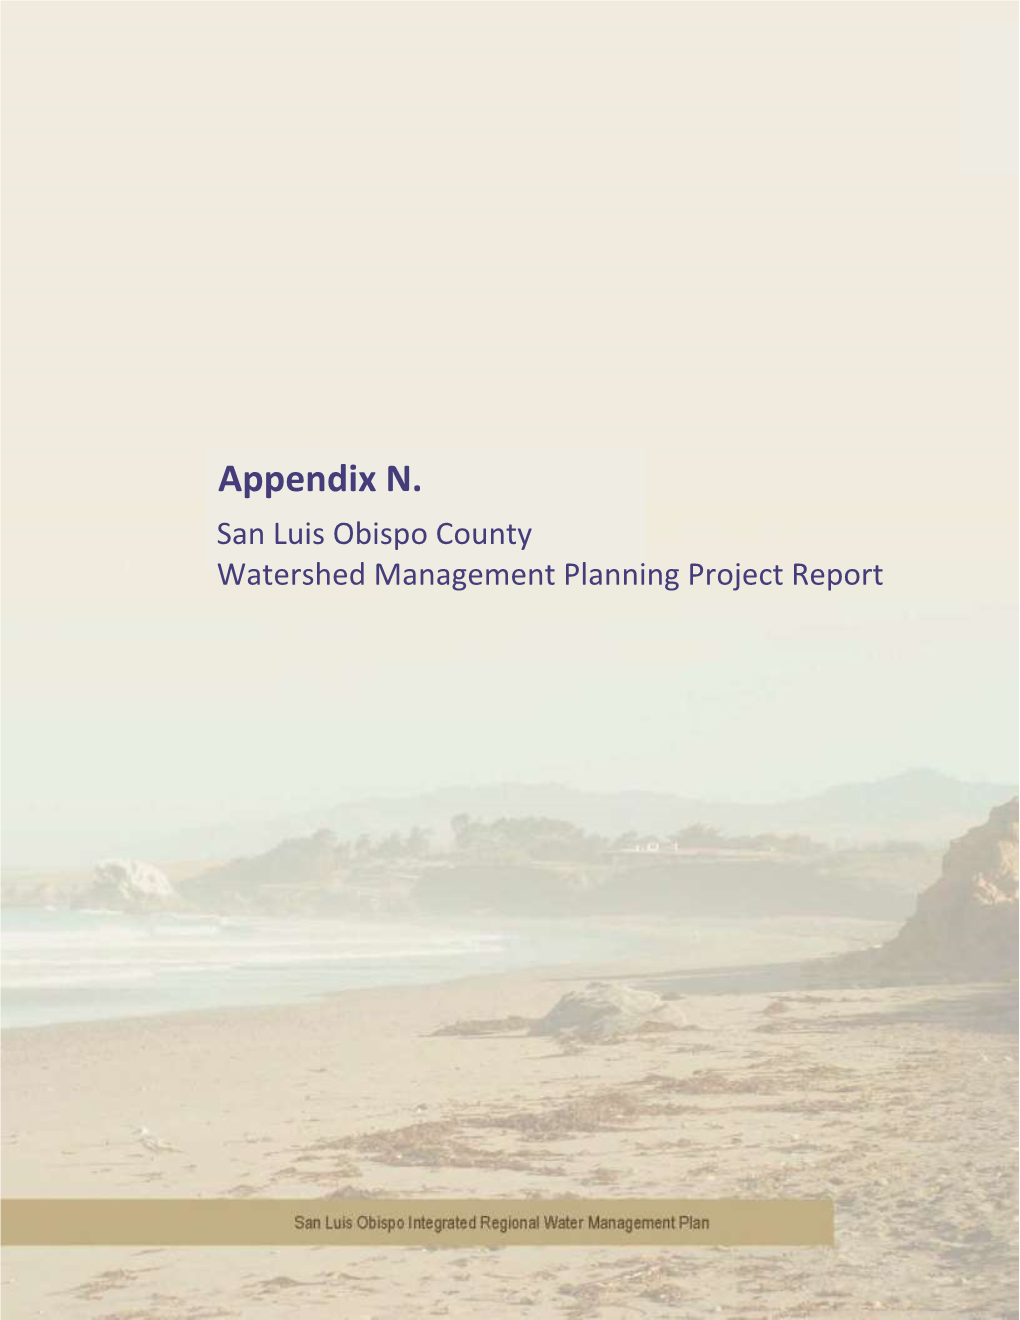 Appendix N. San Luis Obispo County Watershed Management Planning Project Report